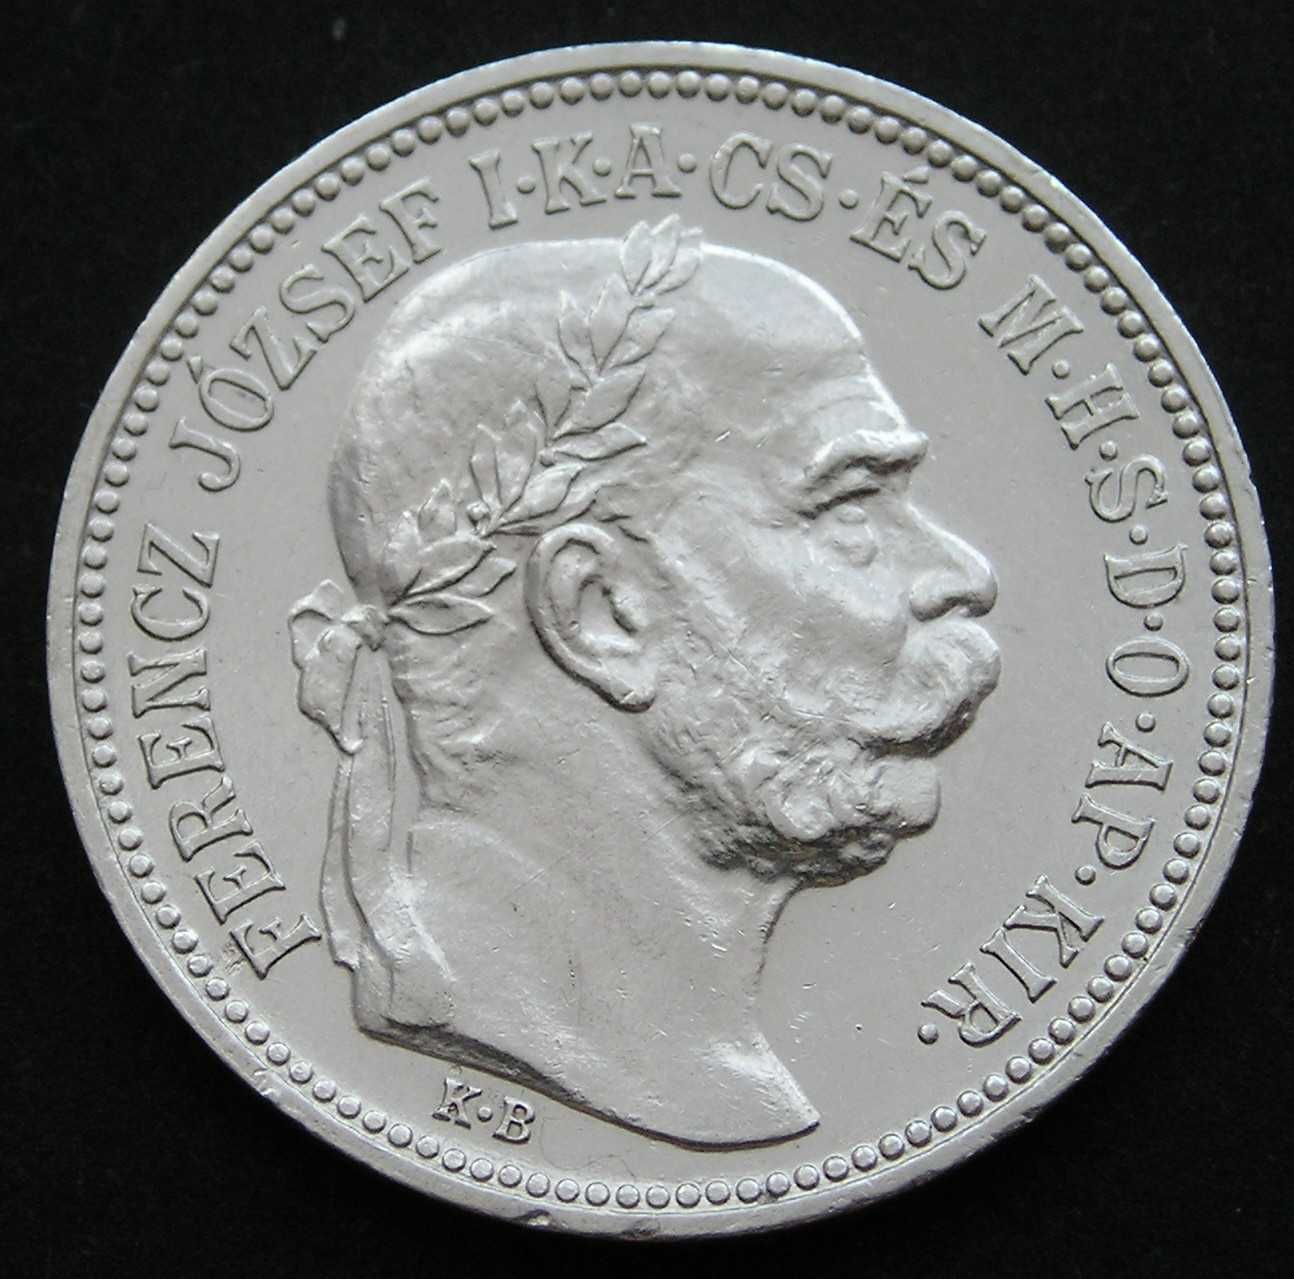 Austro-Węgry 1 korona 1915 - Jozsef Ferencz - srebro